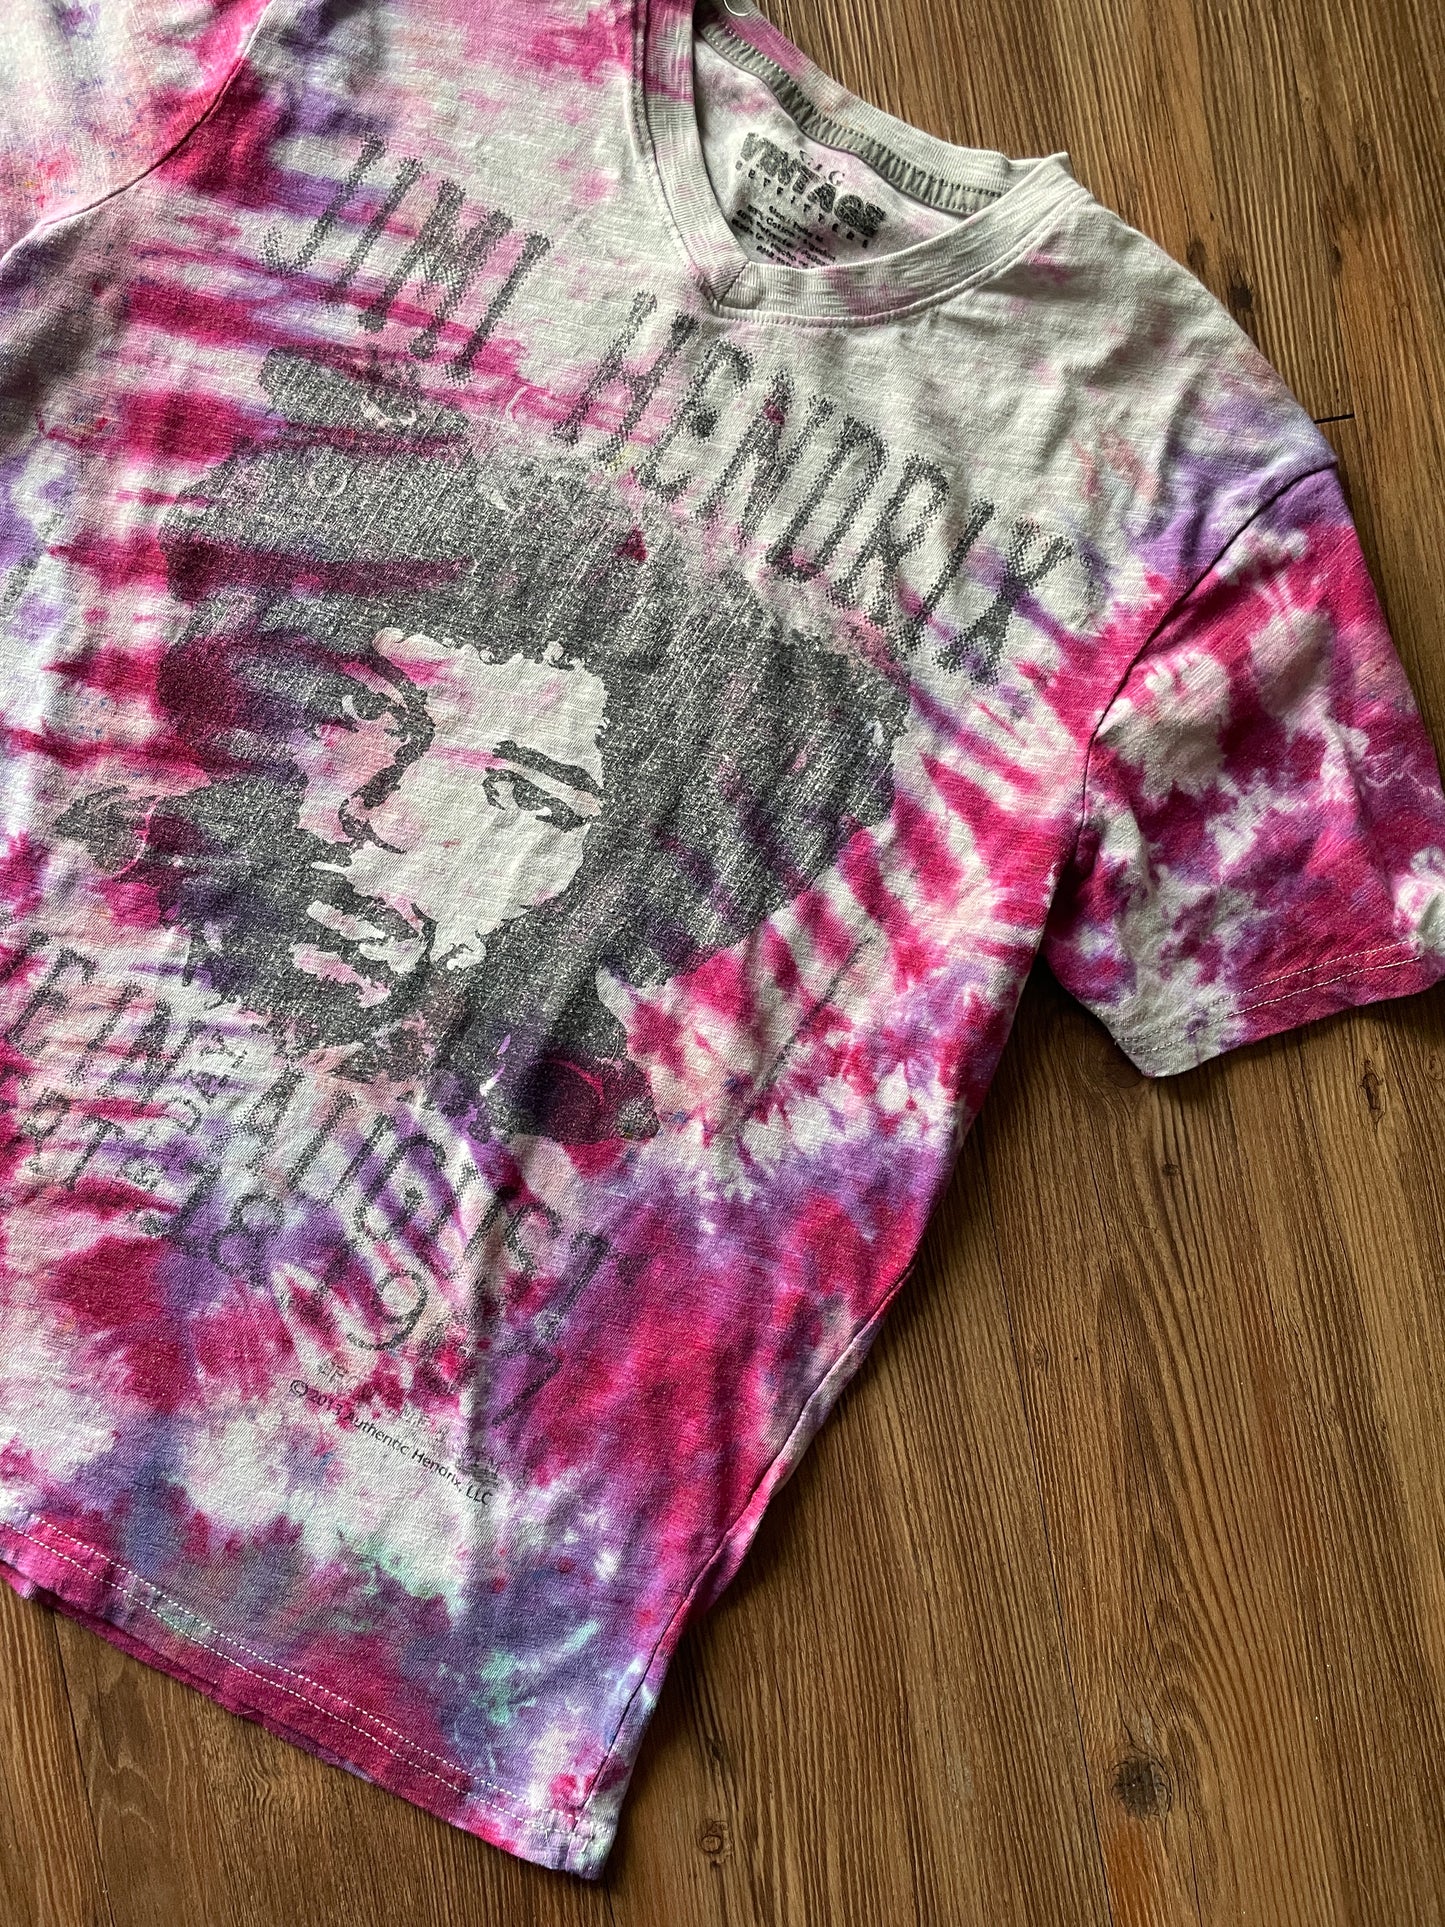 Medium Women’s Jimi Hendrix Tie Dye T-Shirt | Gray, Pink, and Purple Short Sleeve V-Neck